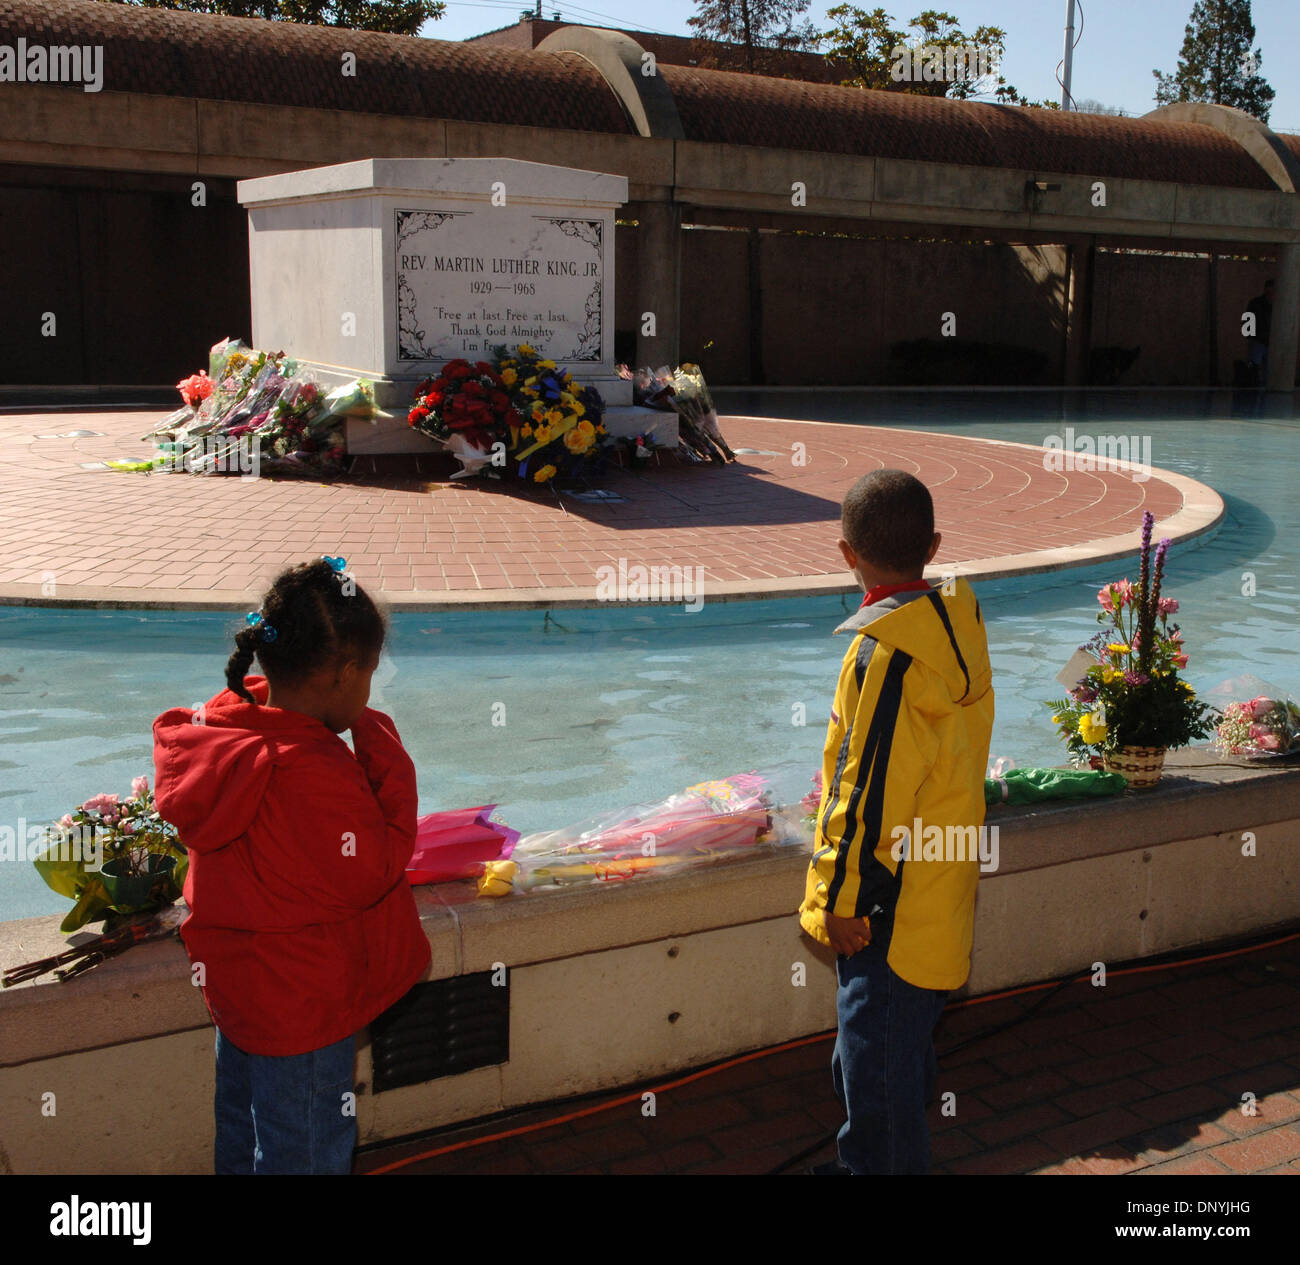 Jan 31, 2006; Atlanta, GA, USA; Elizabeth and Cameron Shepherd of Atlanta leave flowers at MLK tomb to honor Coretta Scott King, who died yesterday.  C O R E T T A   S C O T T   K I N G  ( A p r i l   2 7 ,   1 9 2 7 - J a n u a r y   3 0 ,   2 0 0 6 )   w a s   t h e   w i f e   o f   t h e   s l a i n   c i v i l   r i gh t s   a c t i v i s t   M a r t i n   L u t h e r   K i n  Stock Photo